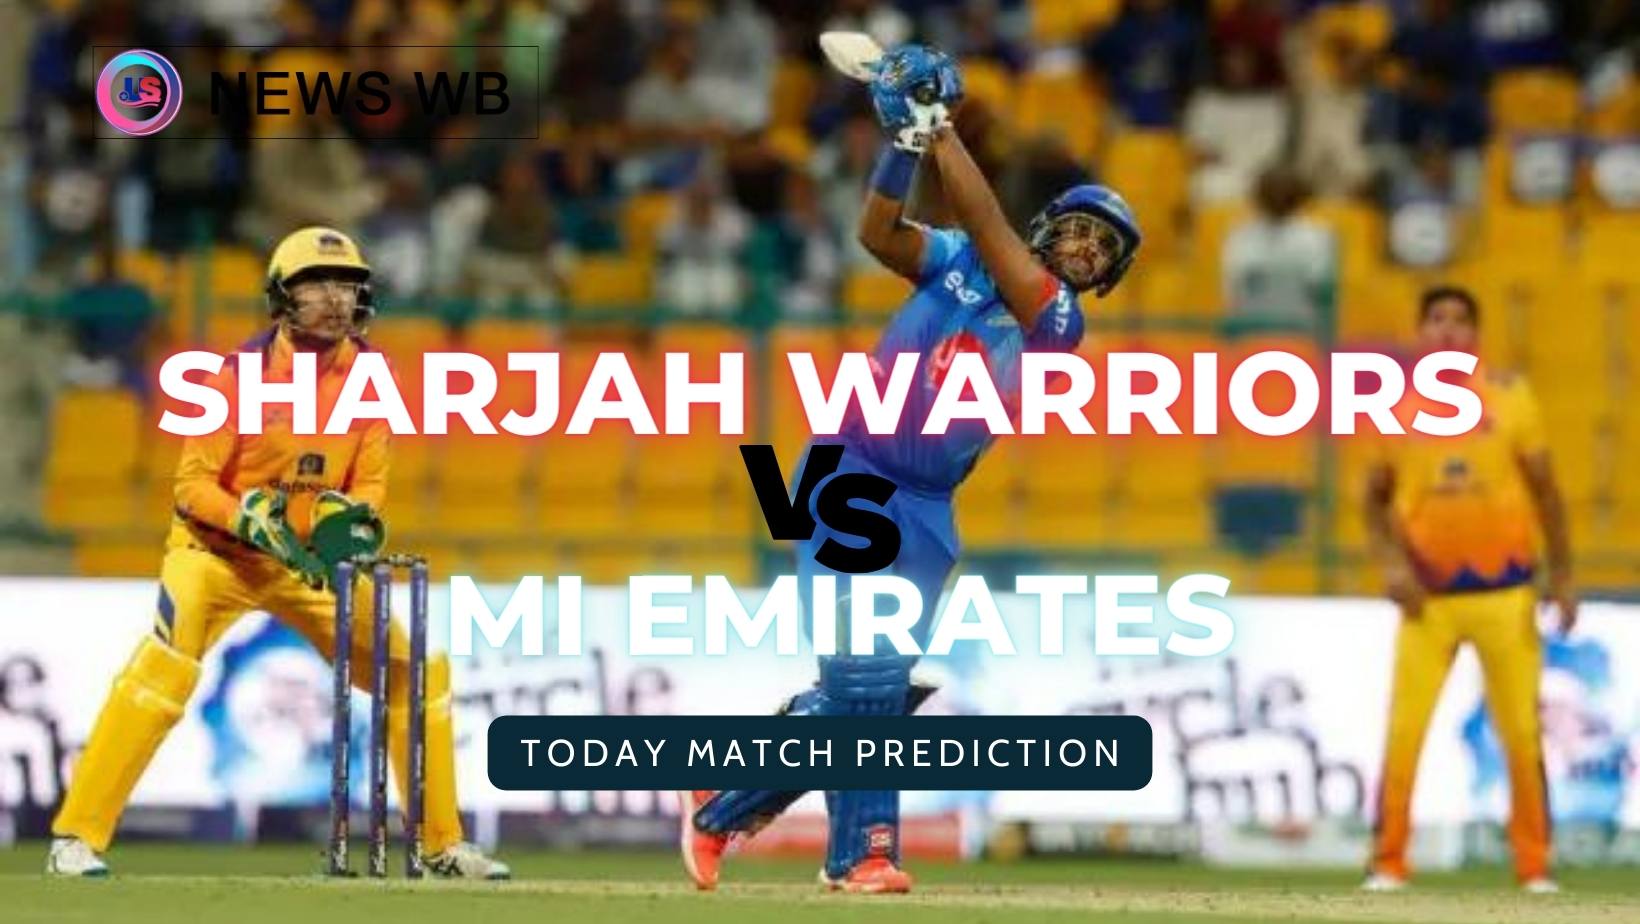 Today Match Prediction: SW vs MIE Dream11 Team, Sharjah Warriors vs Mi Emirates 9th Match, Who Will Win?